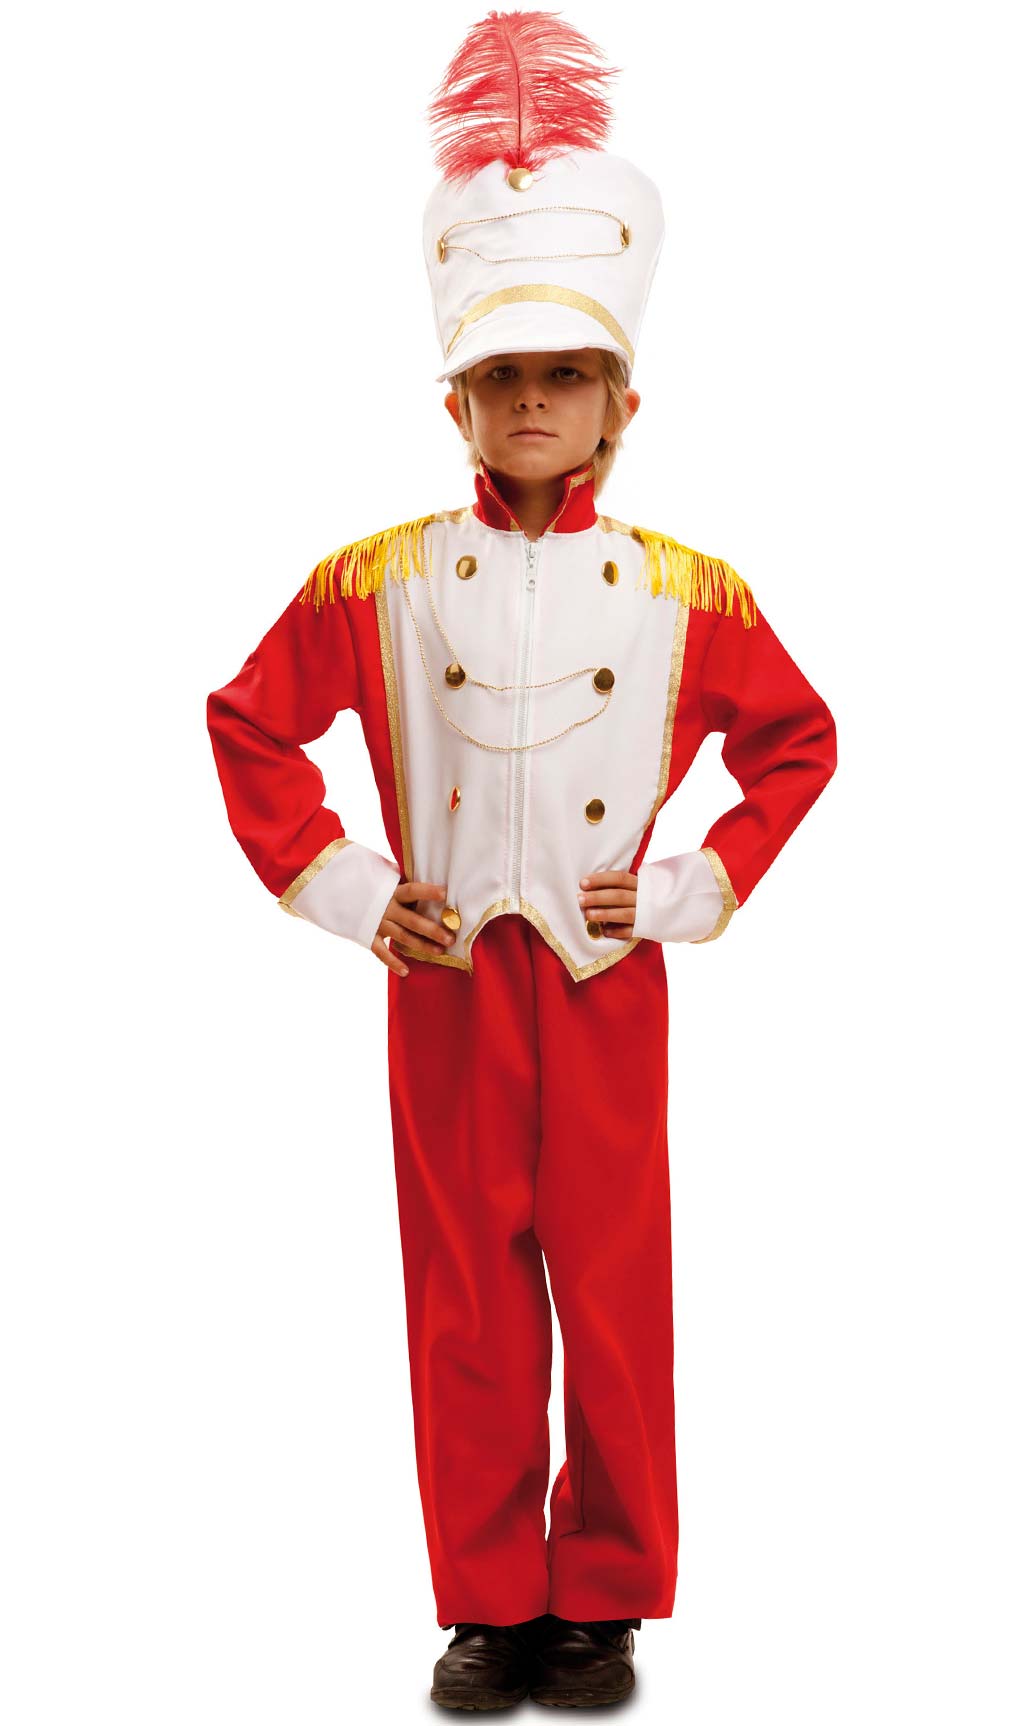 Deguisement Soldat Plomb - Deguisement Enfant Garçons Le Deguisement.com